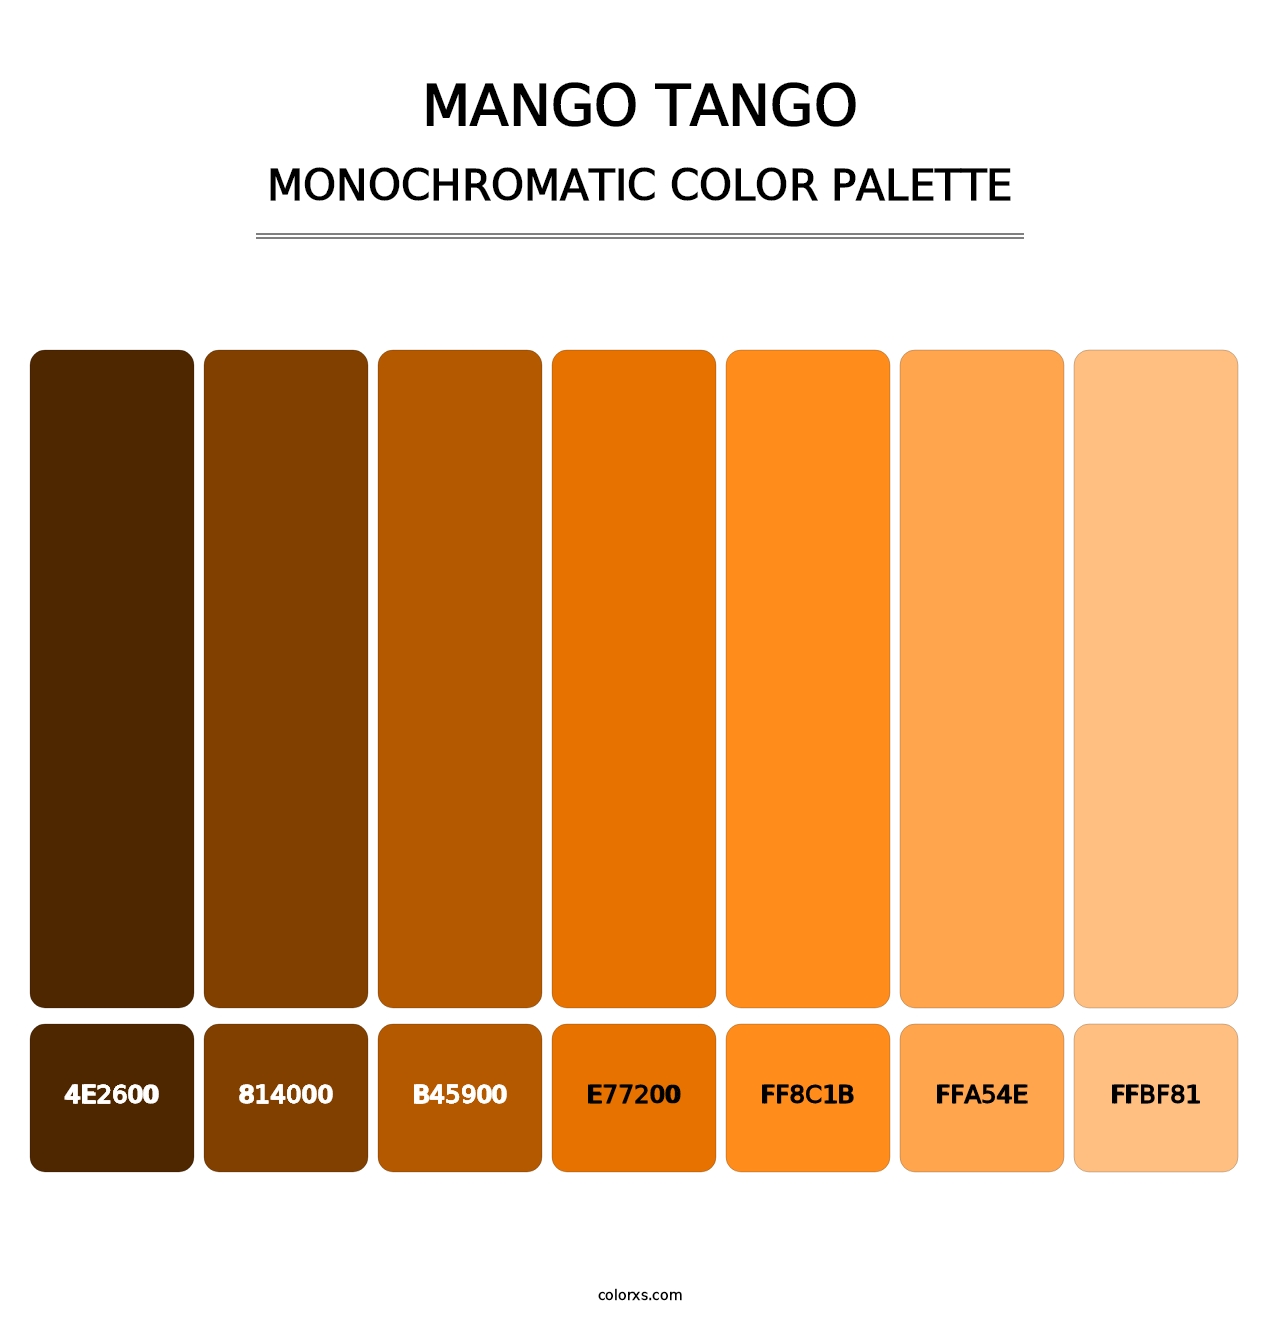 Mango Tango - Monochromatic Color Palette